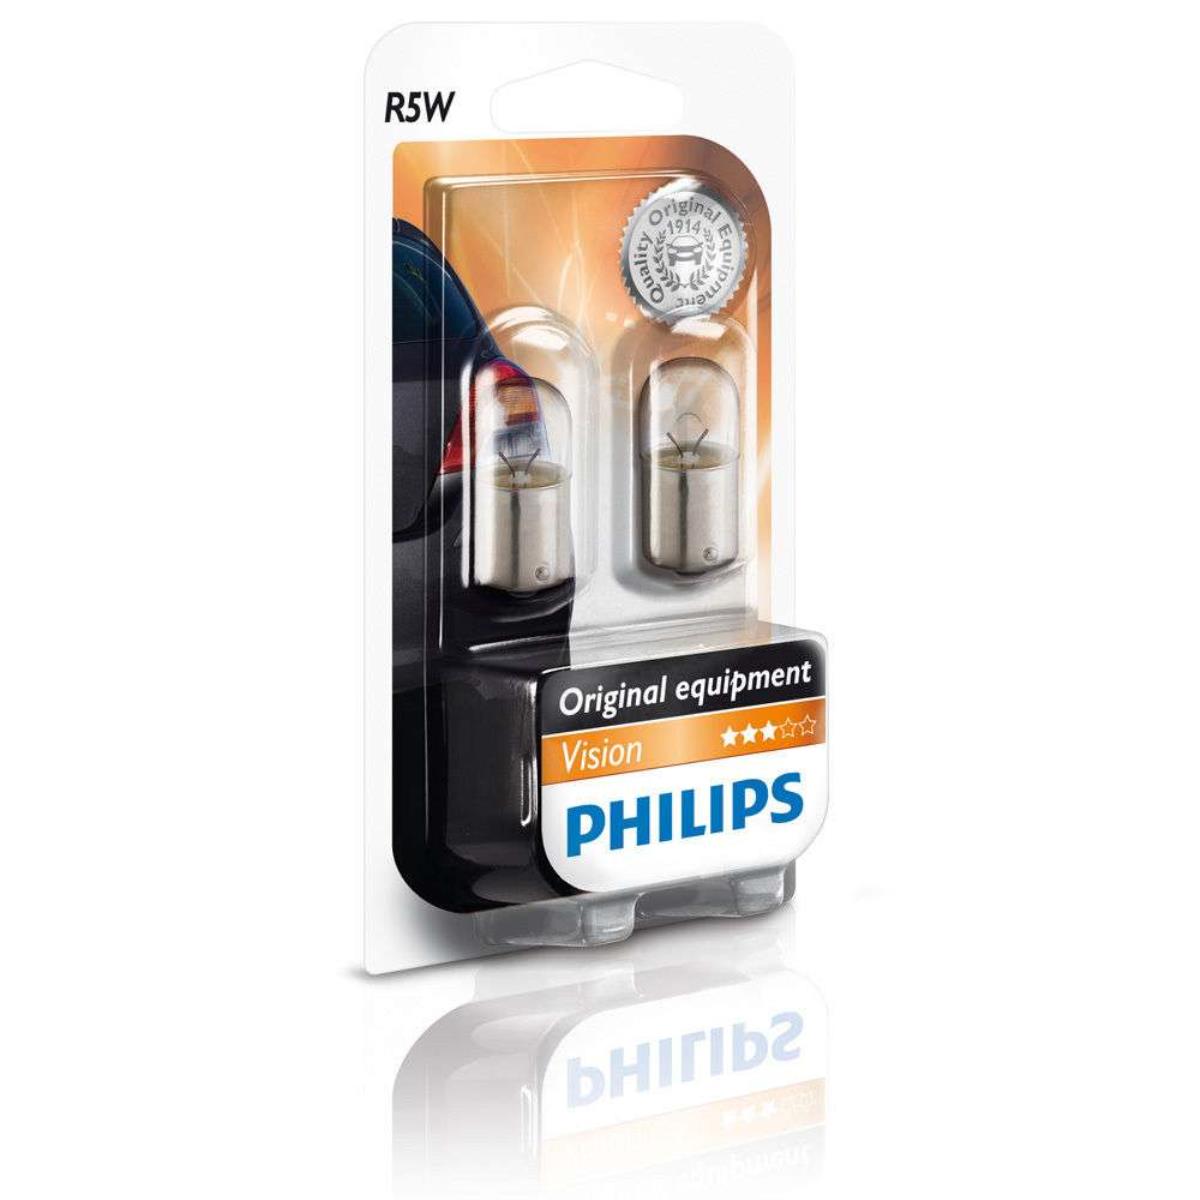 Philips Vision 2st. R5W 12V 5W  BA15s Blister Lampe Birne